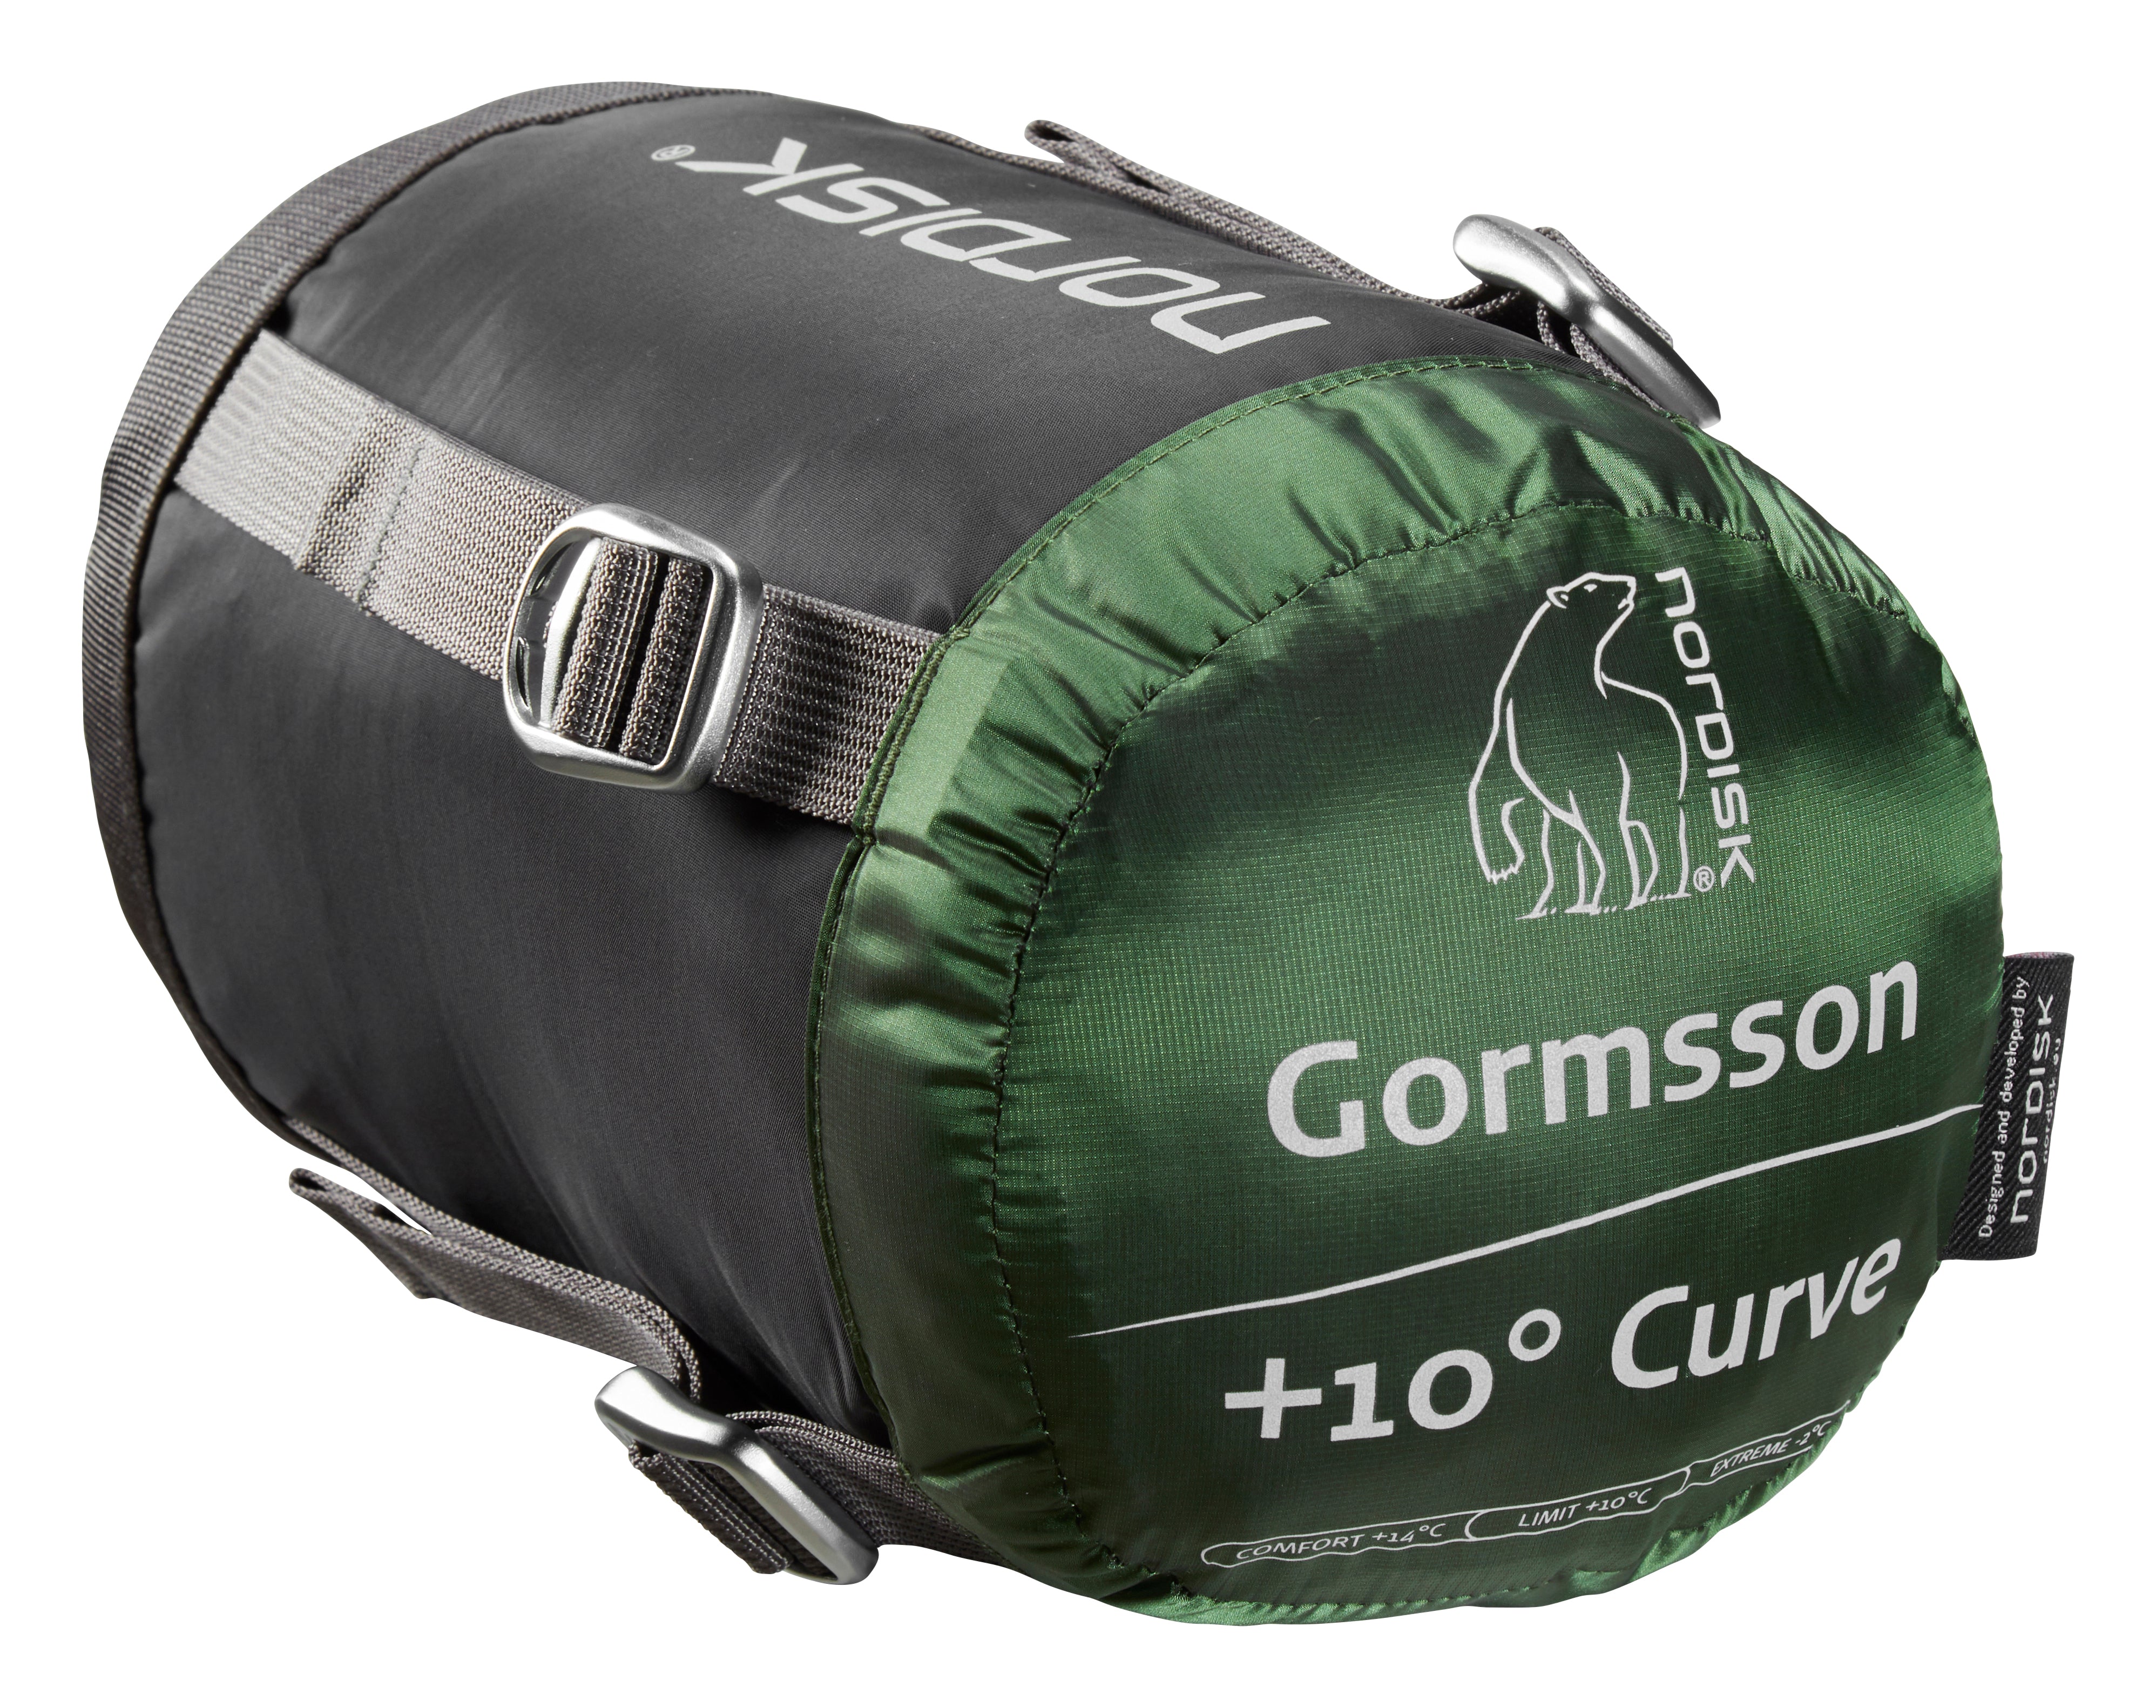 Gormsson +10 Curve